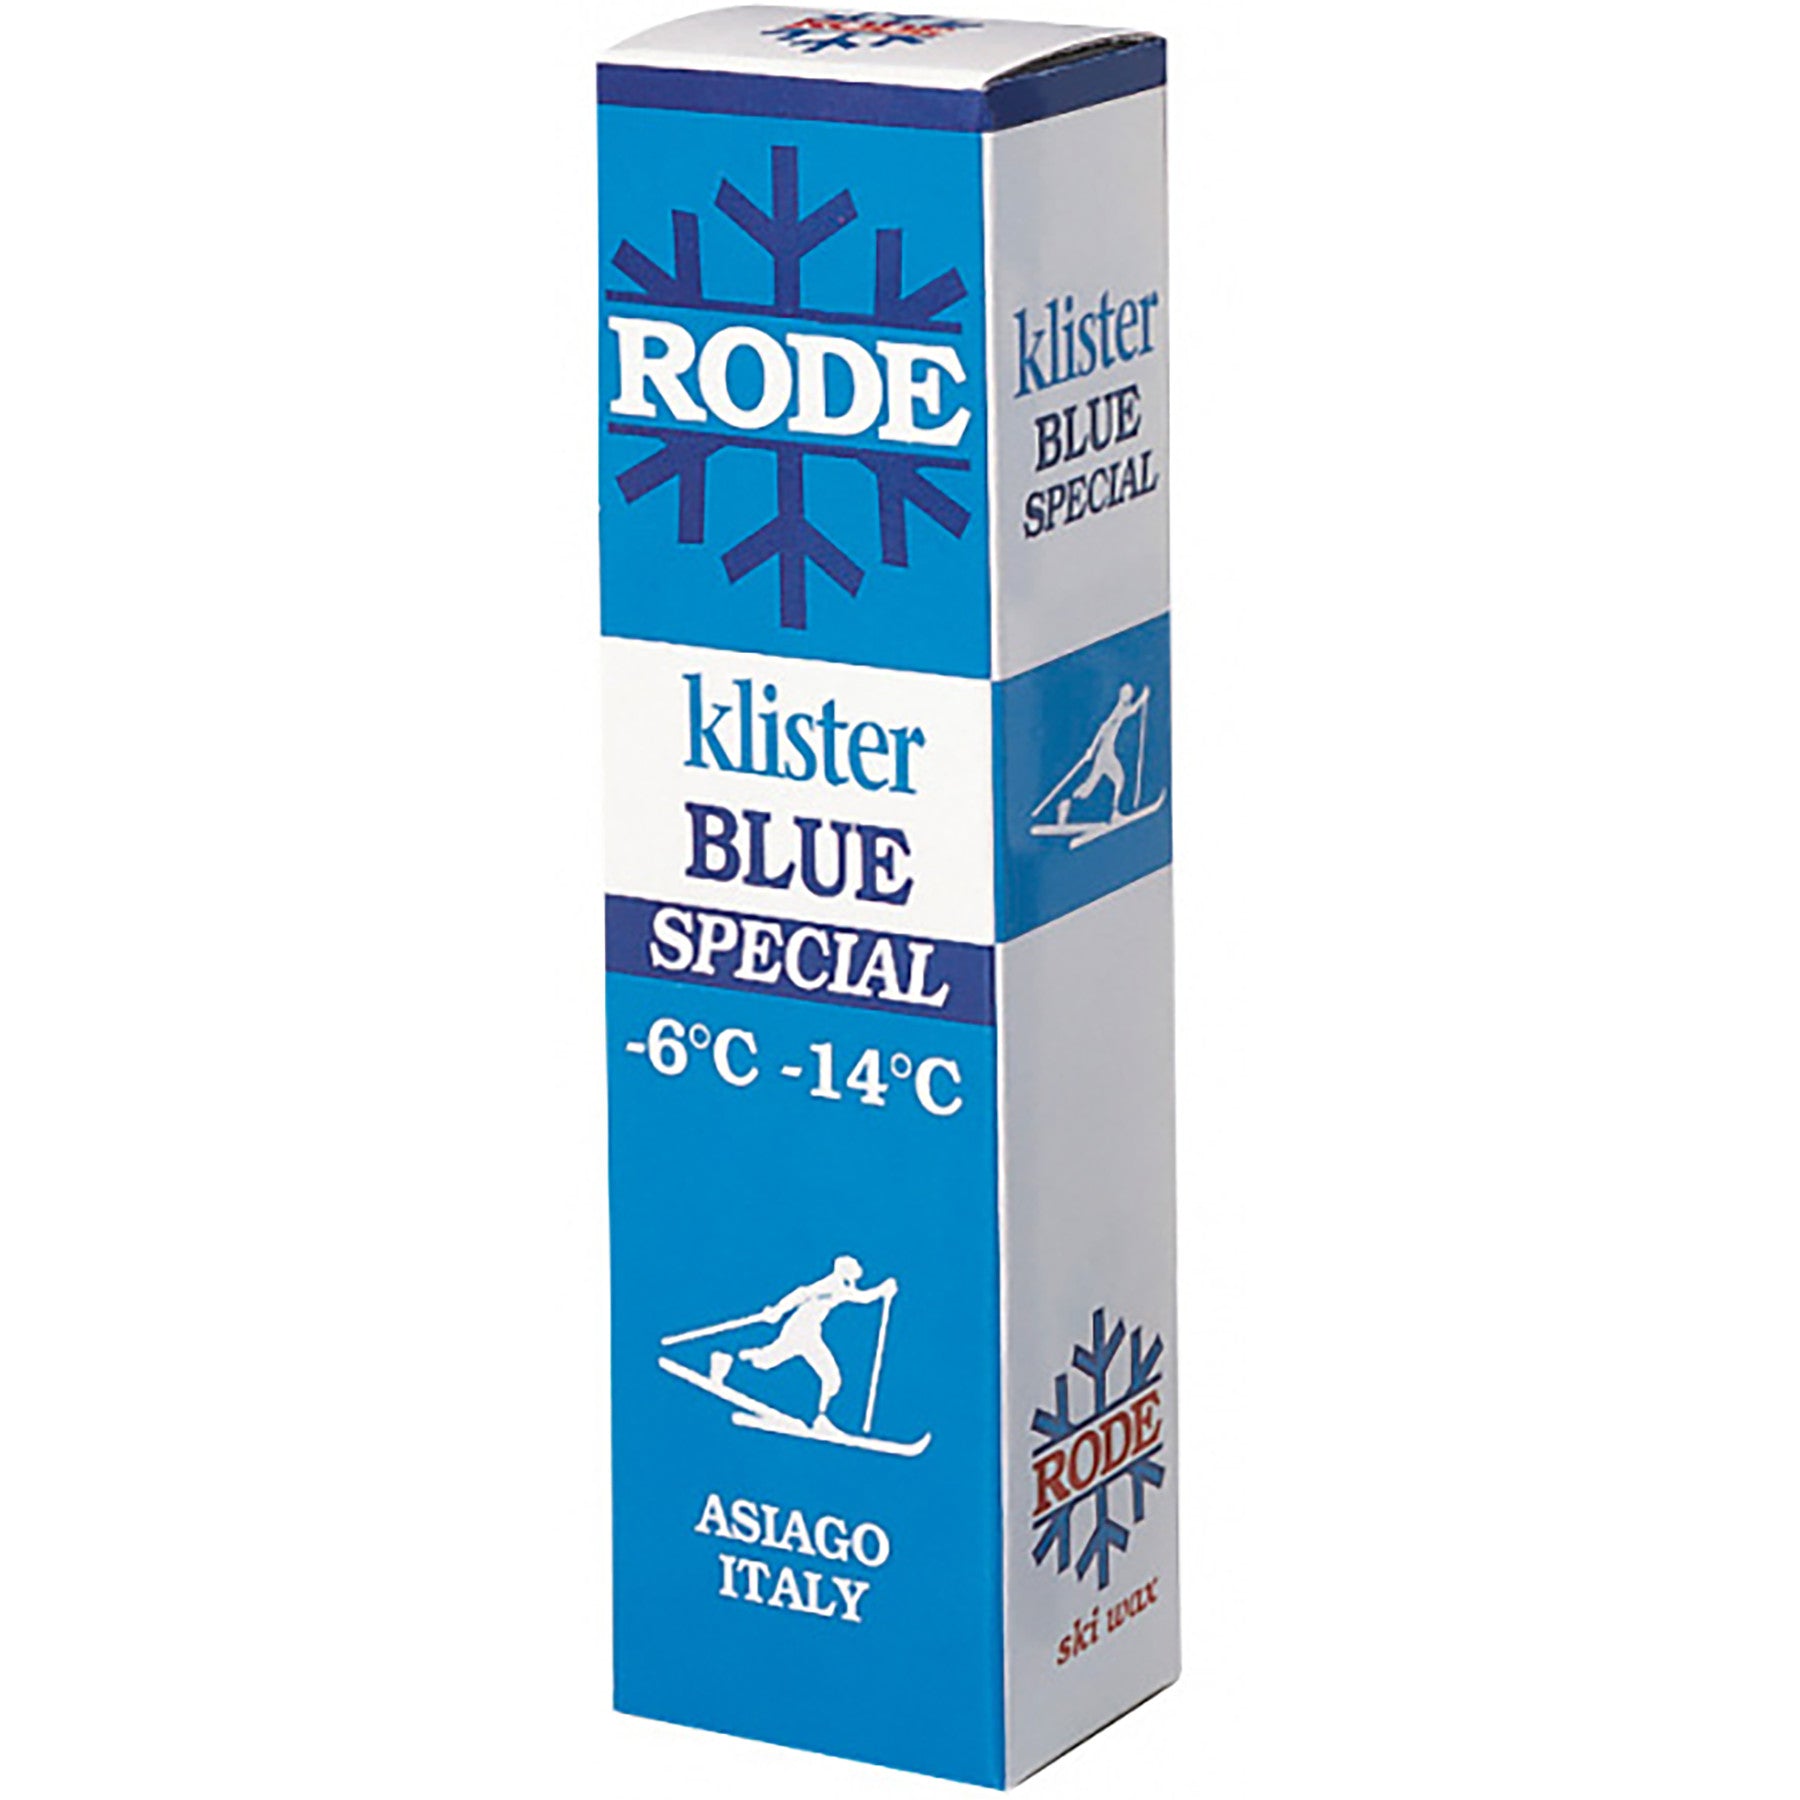 Buy blue-special-k10 Rode Klister 60g tube